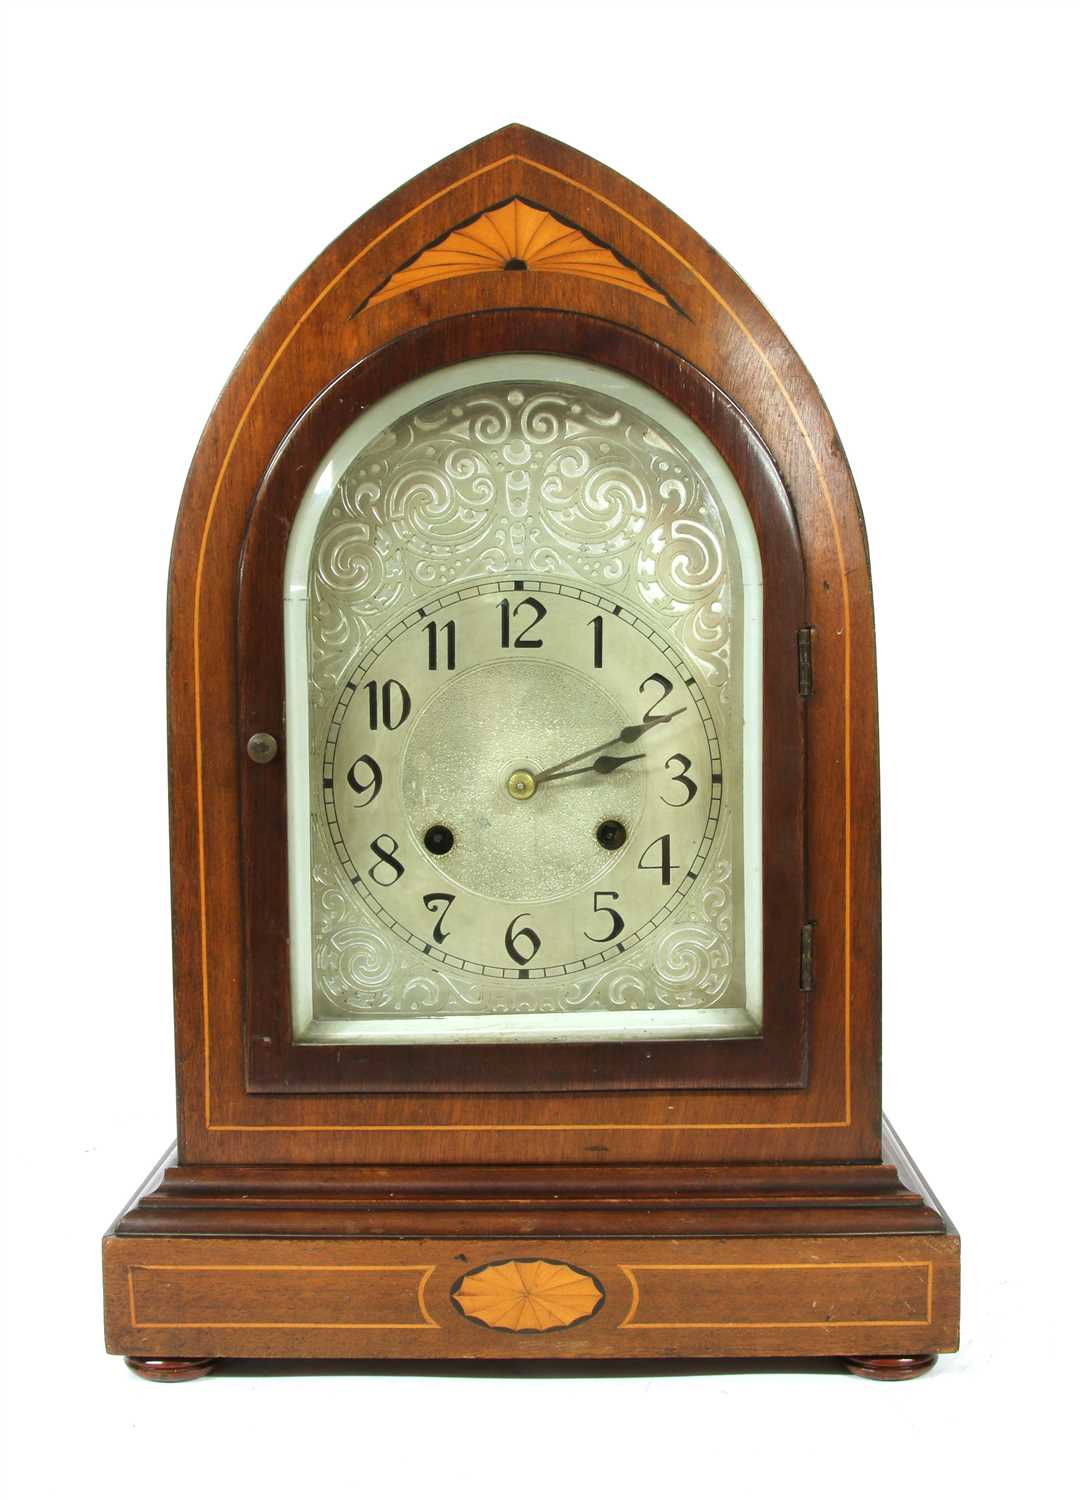 A George III style inlaid mahogany lancet clock